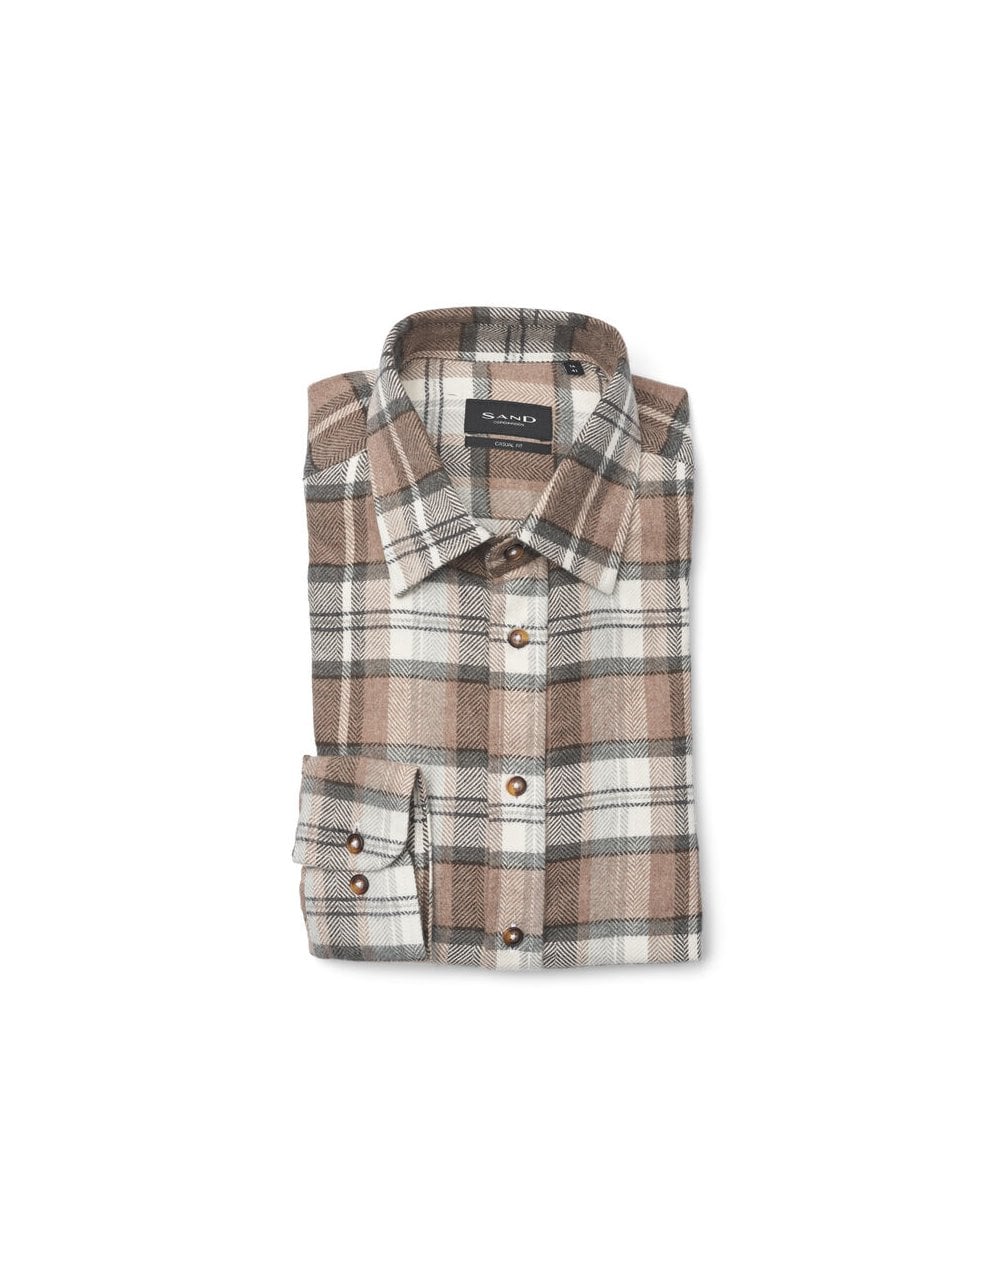 SAND Simon N Flannel Check Shirt Col: 240 Brown Multi, Size: 41